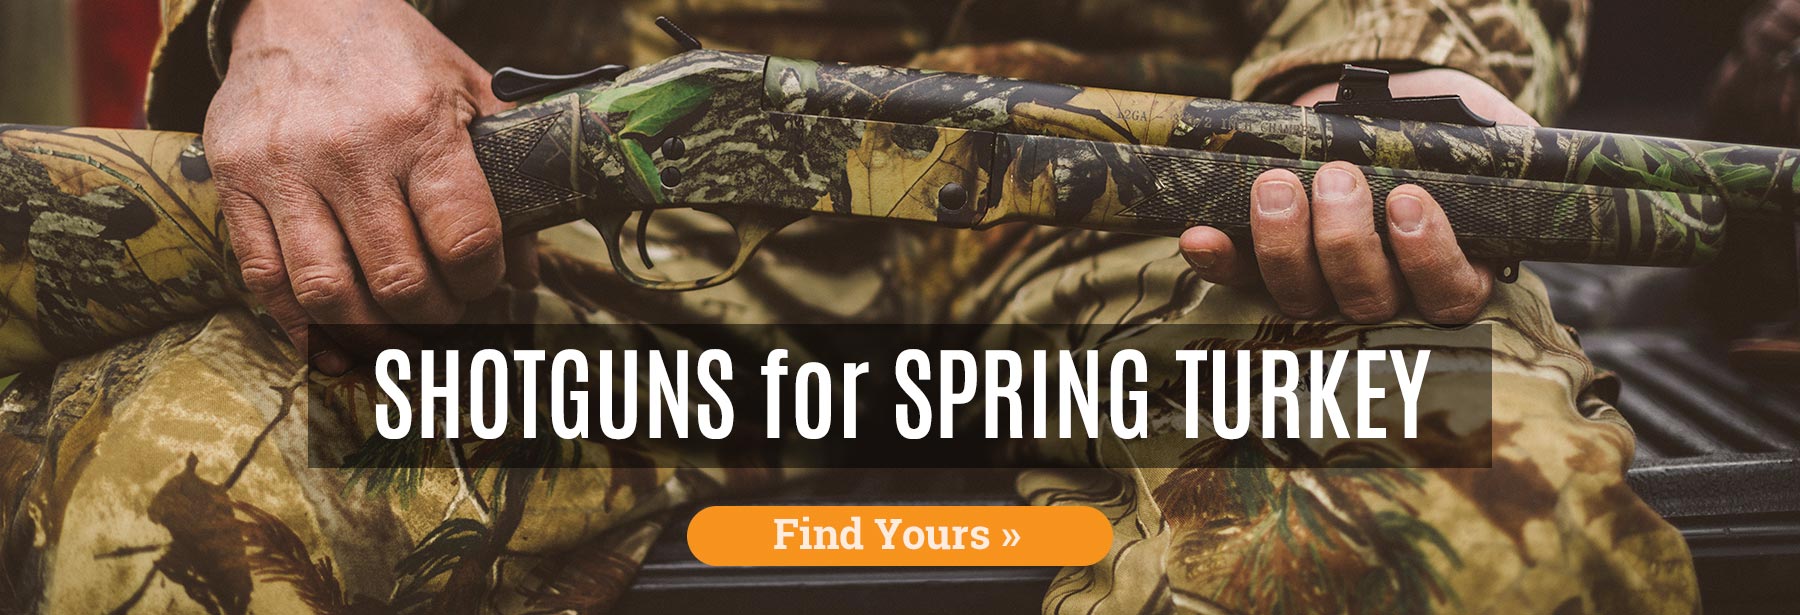 Shotguns for Spring Turkey Hunting